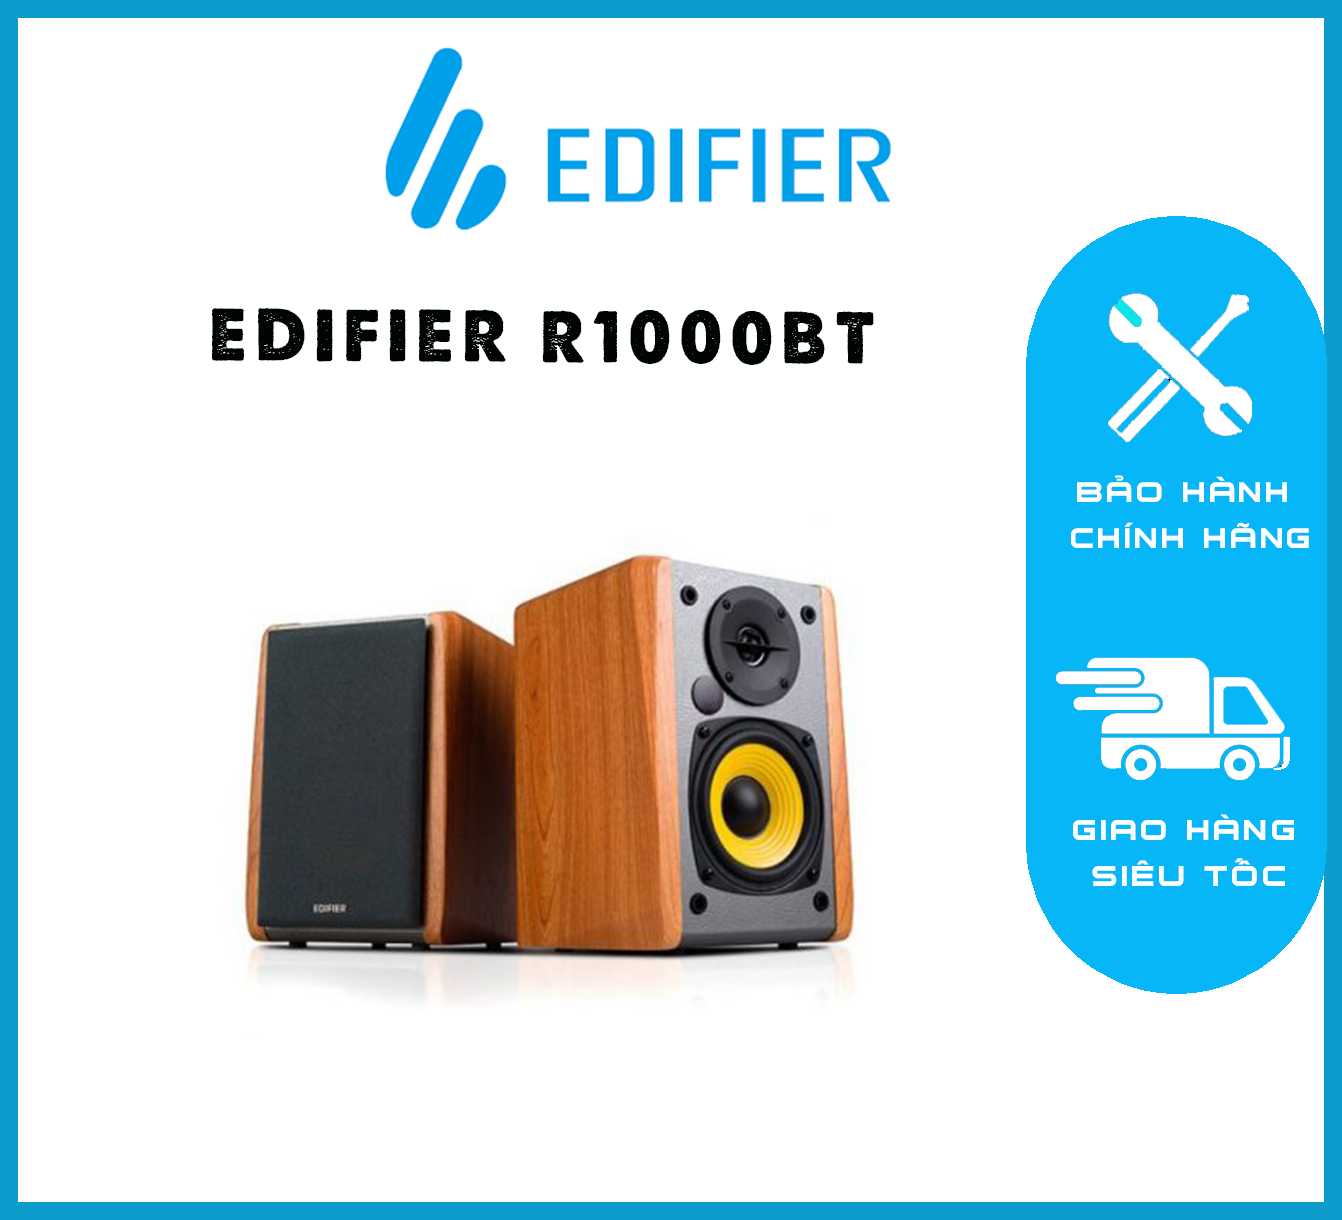 EDIFIER R1000BT